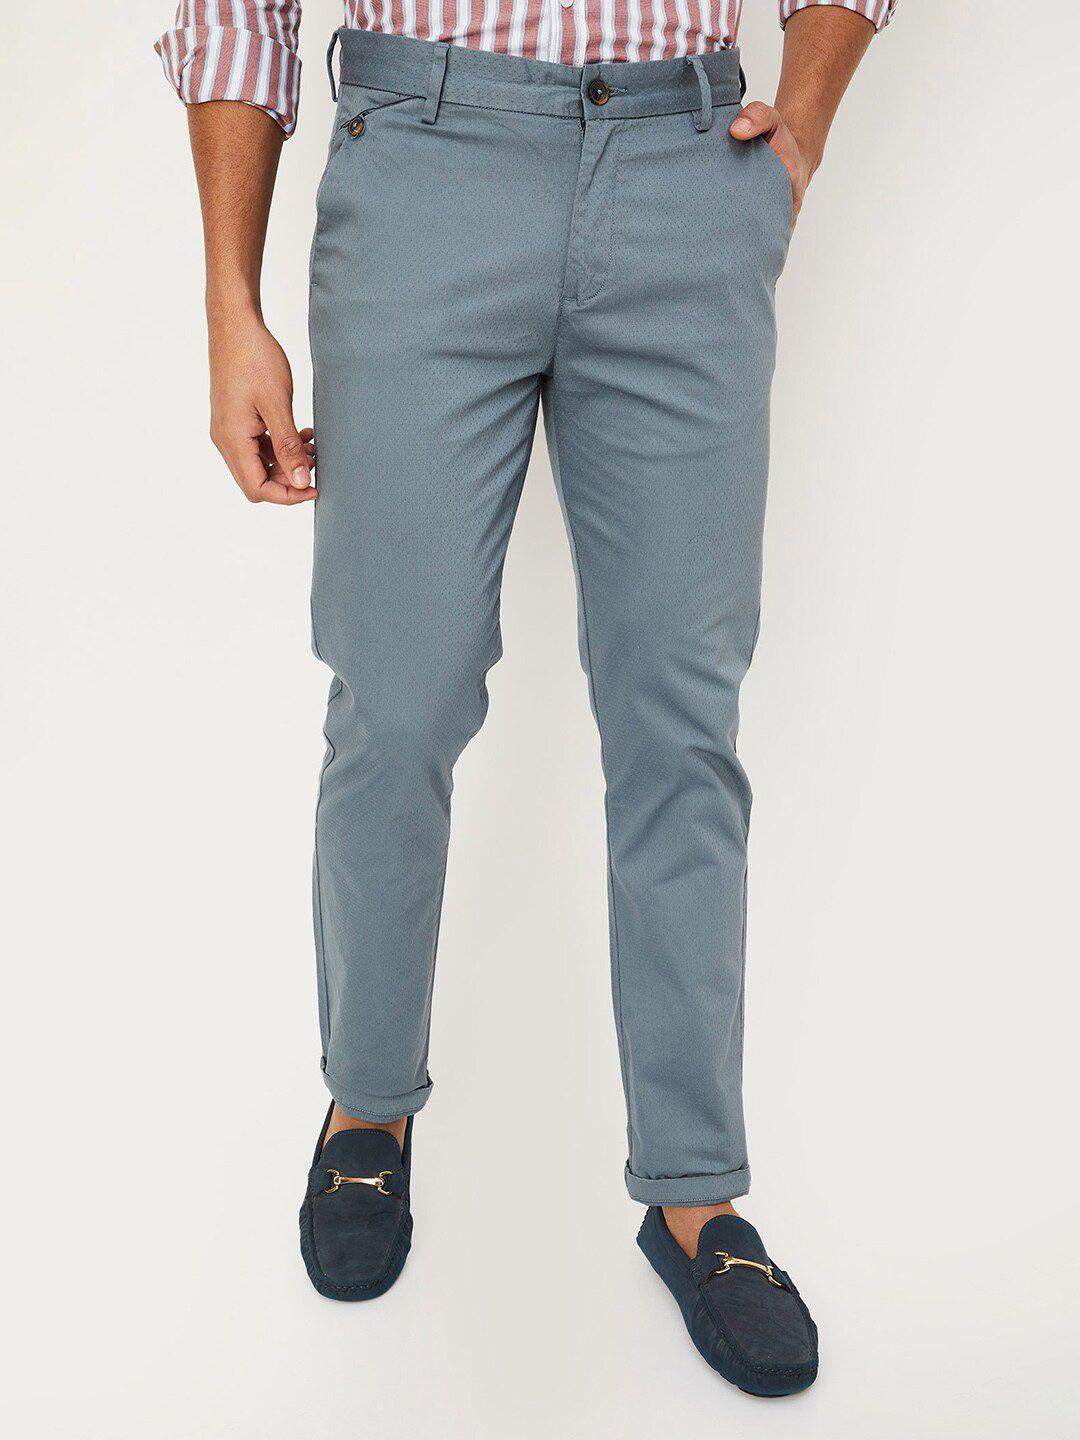 max-men-abstract-printed-regular-trousers